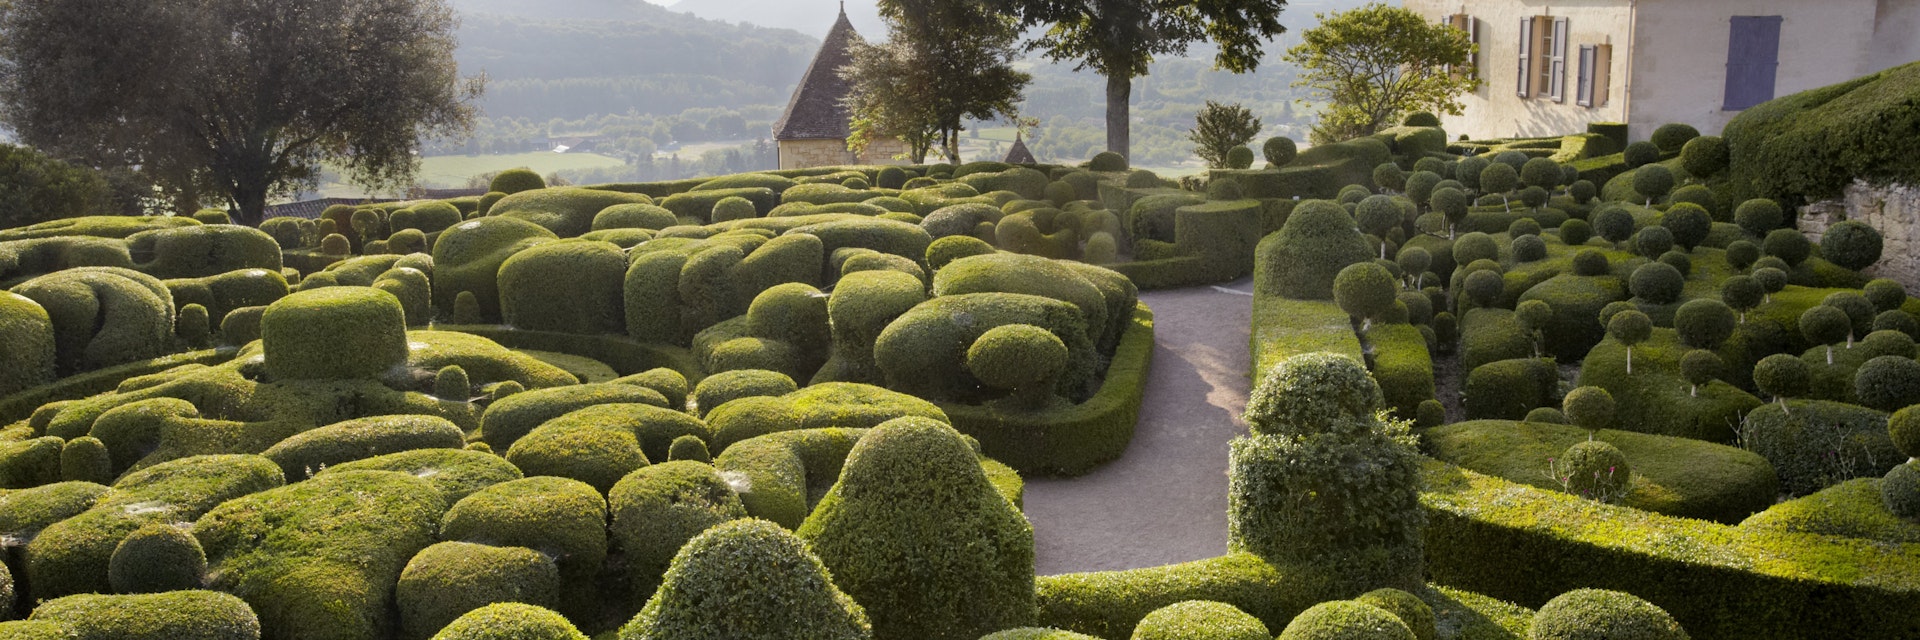 The Jardins de Marqueyssac feature some 150,000 hand-pruned boxwoods